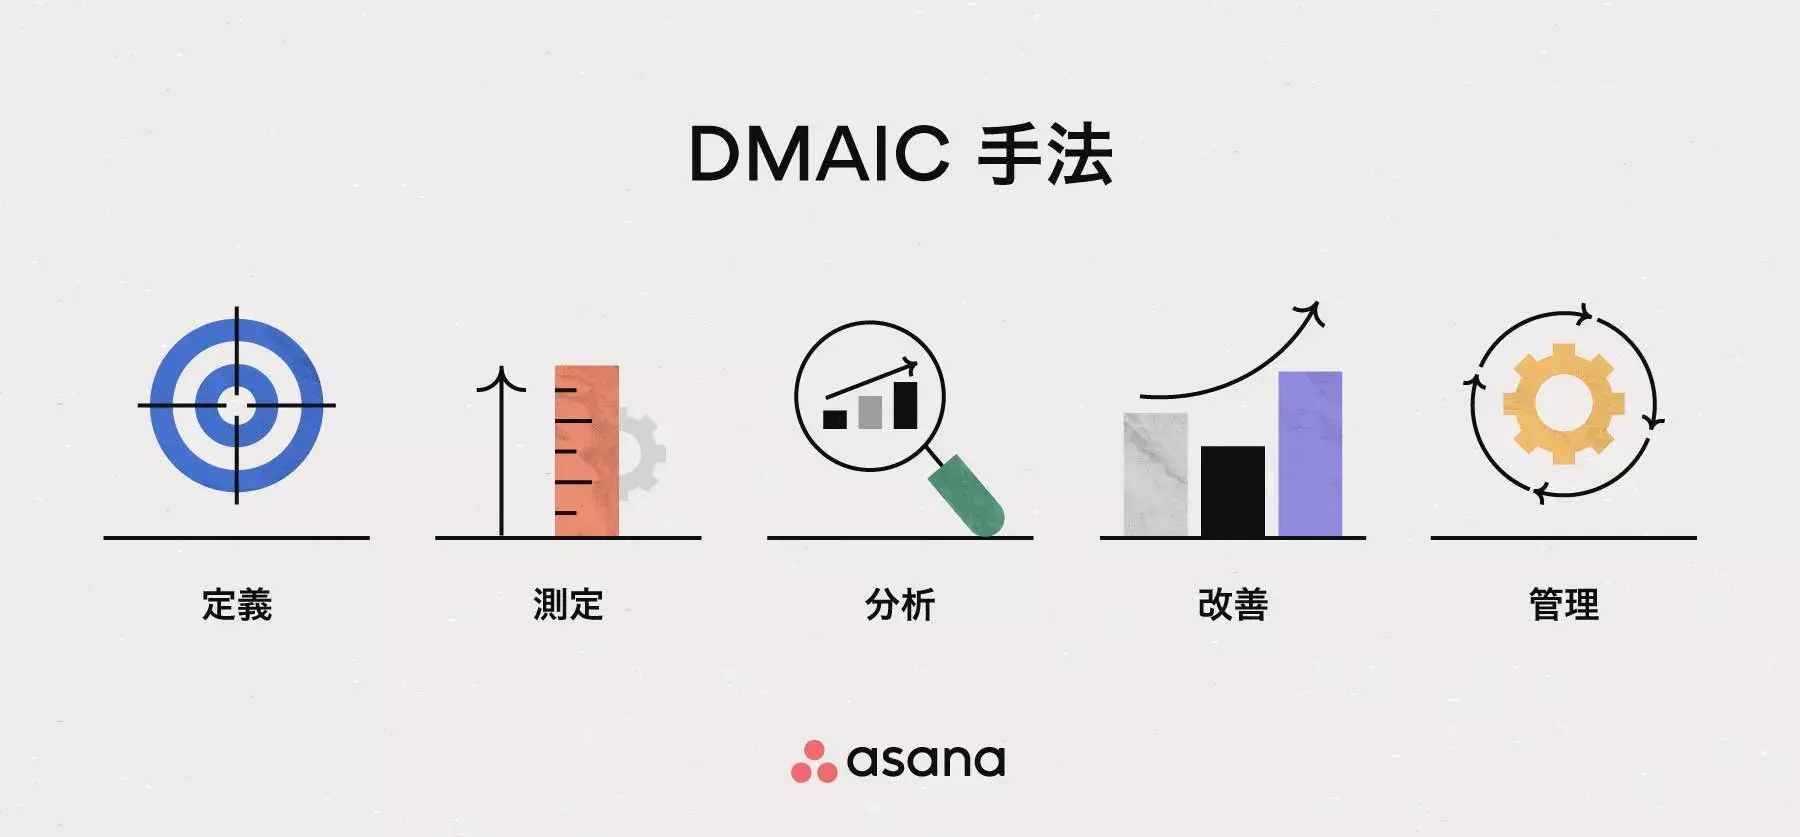 [inline illustration] The DMAIC method (infographic)